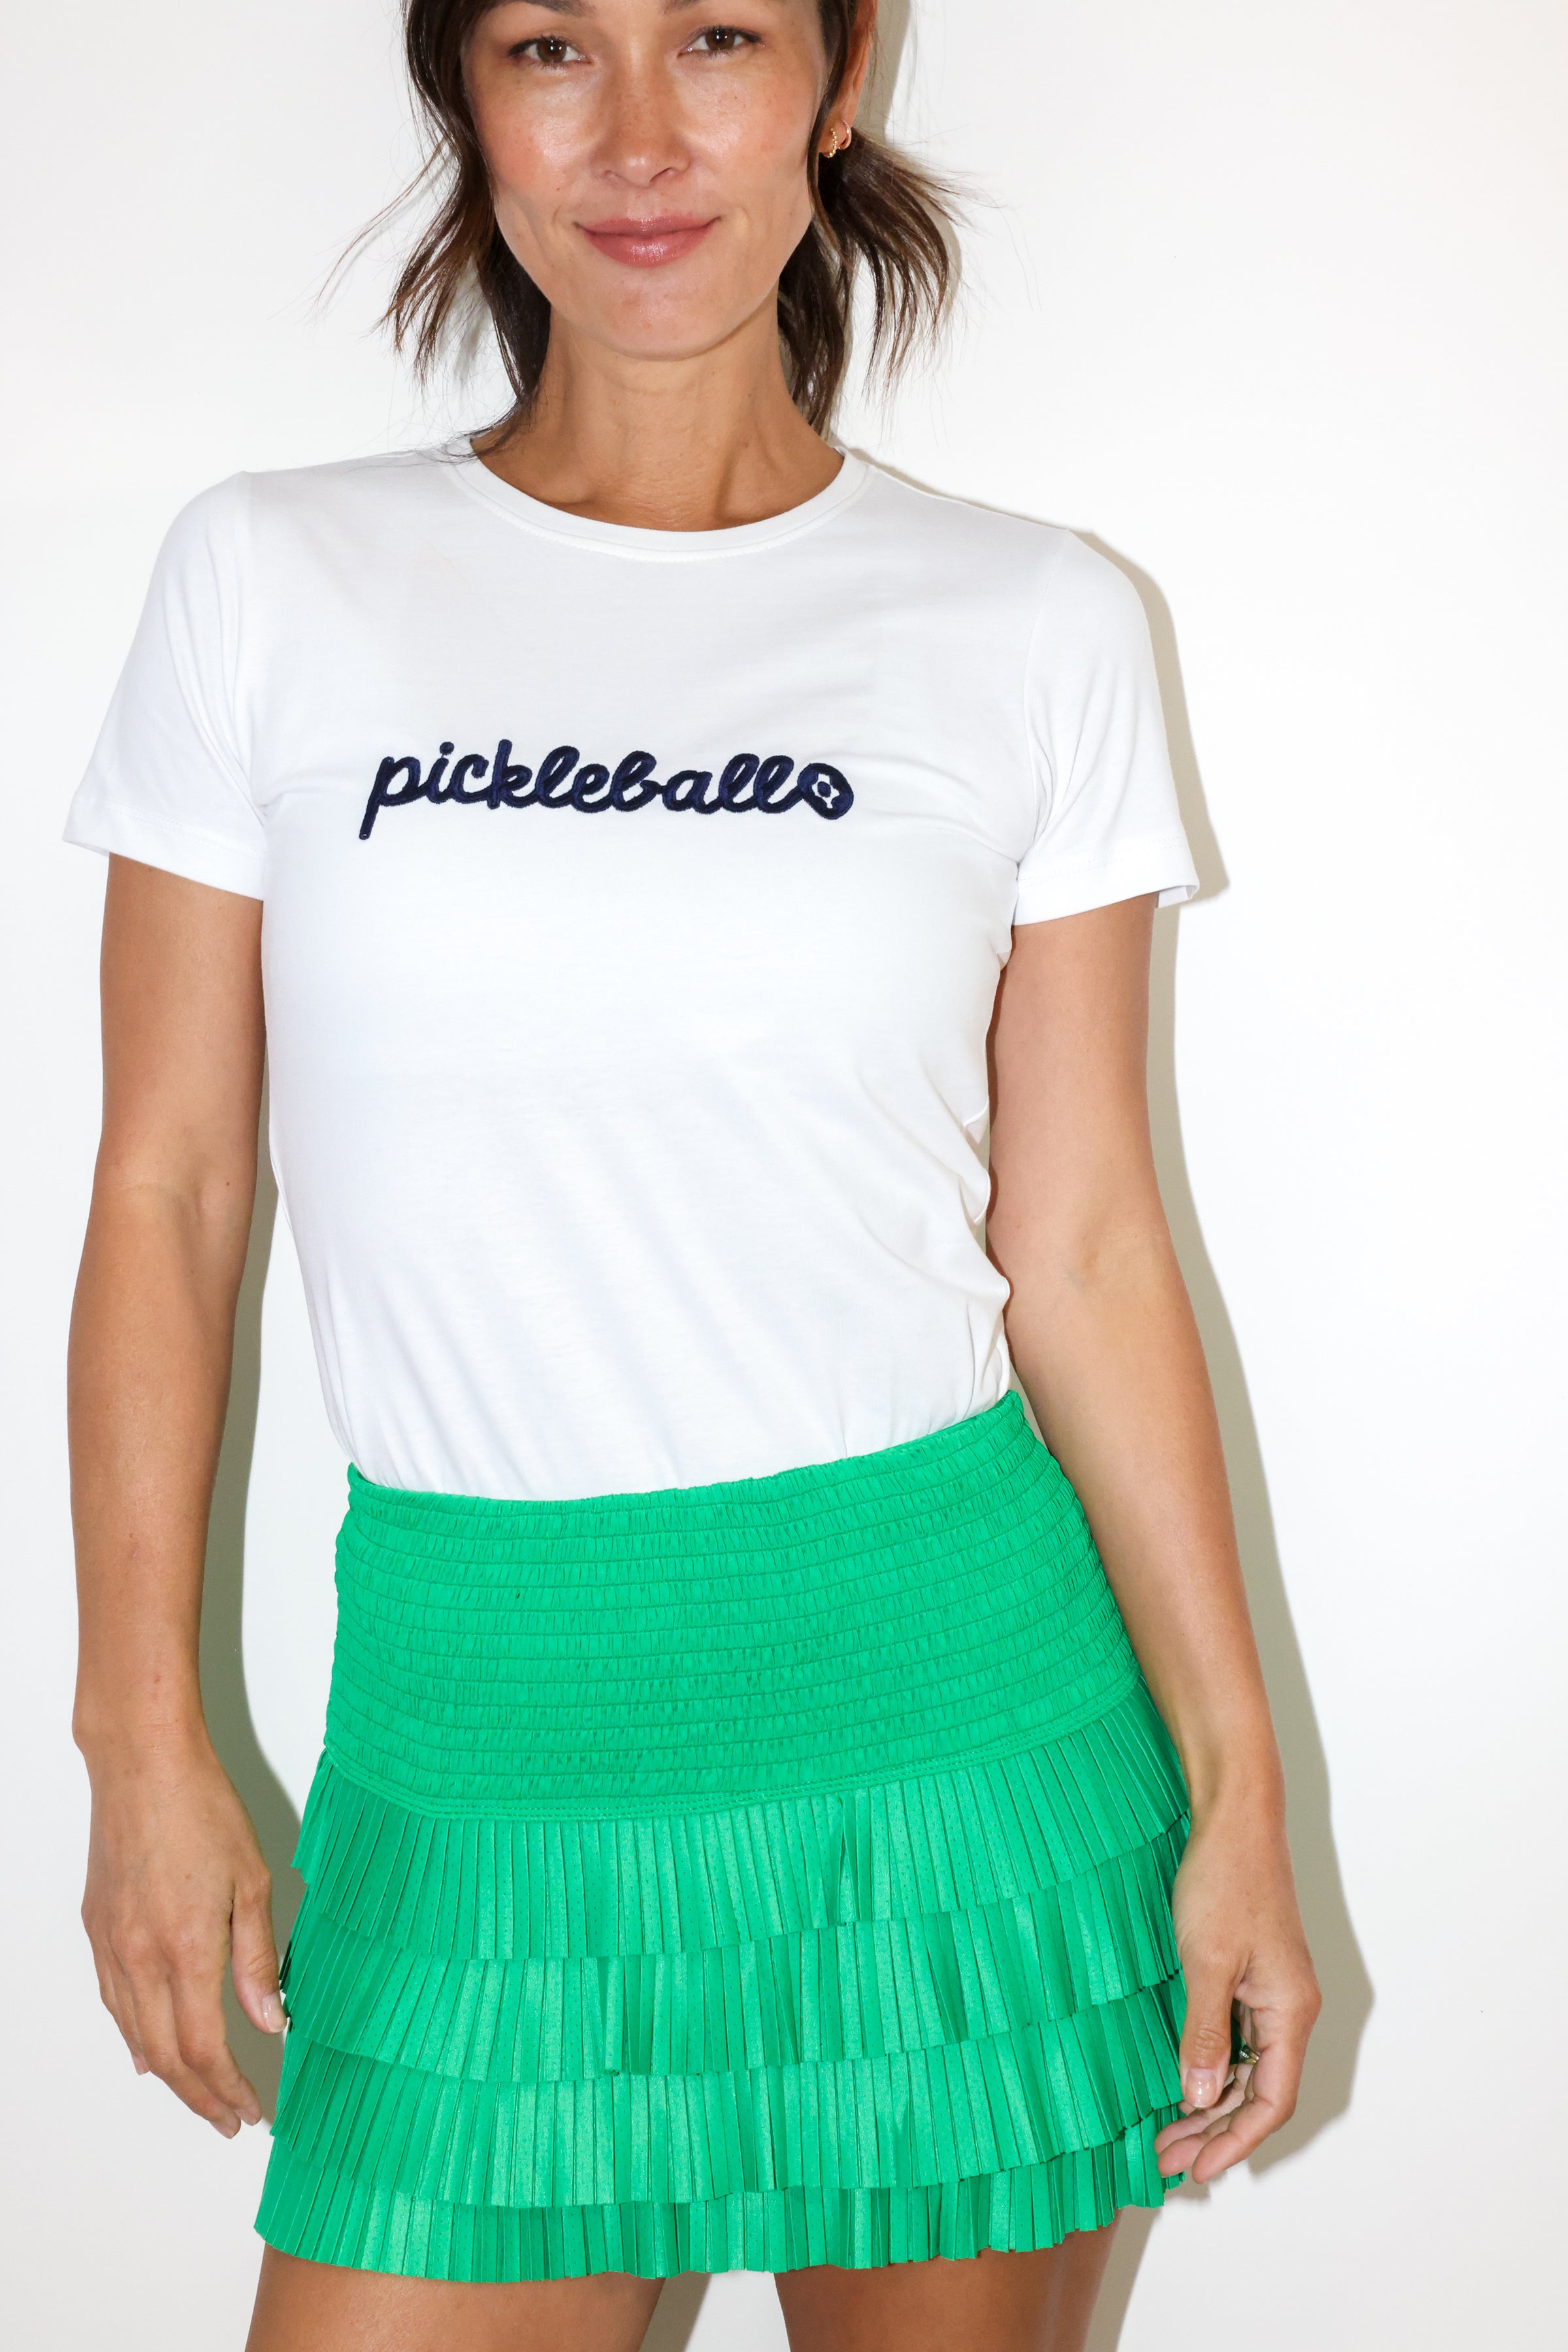 Pickleball Stitch TShirt